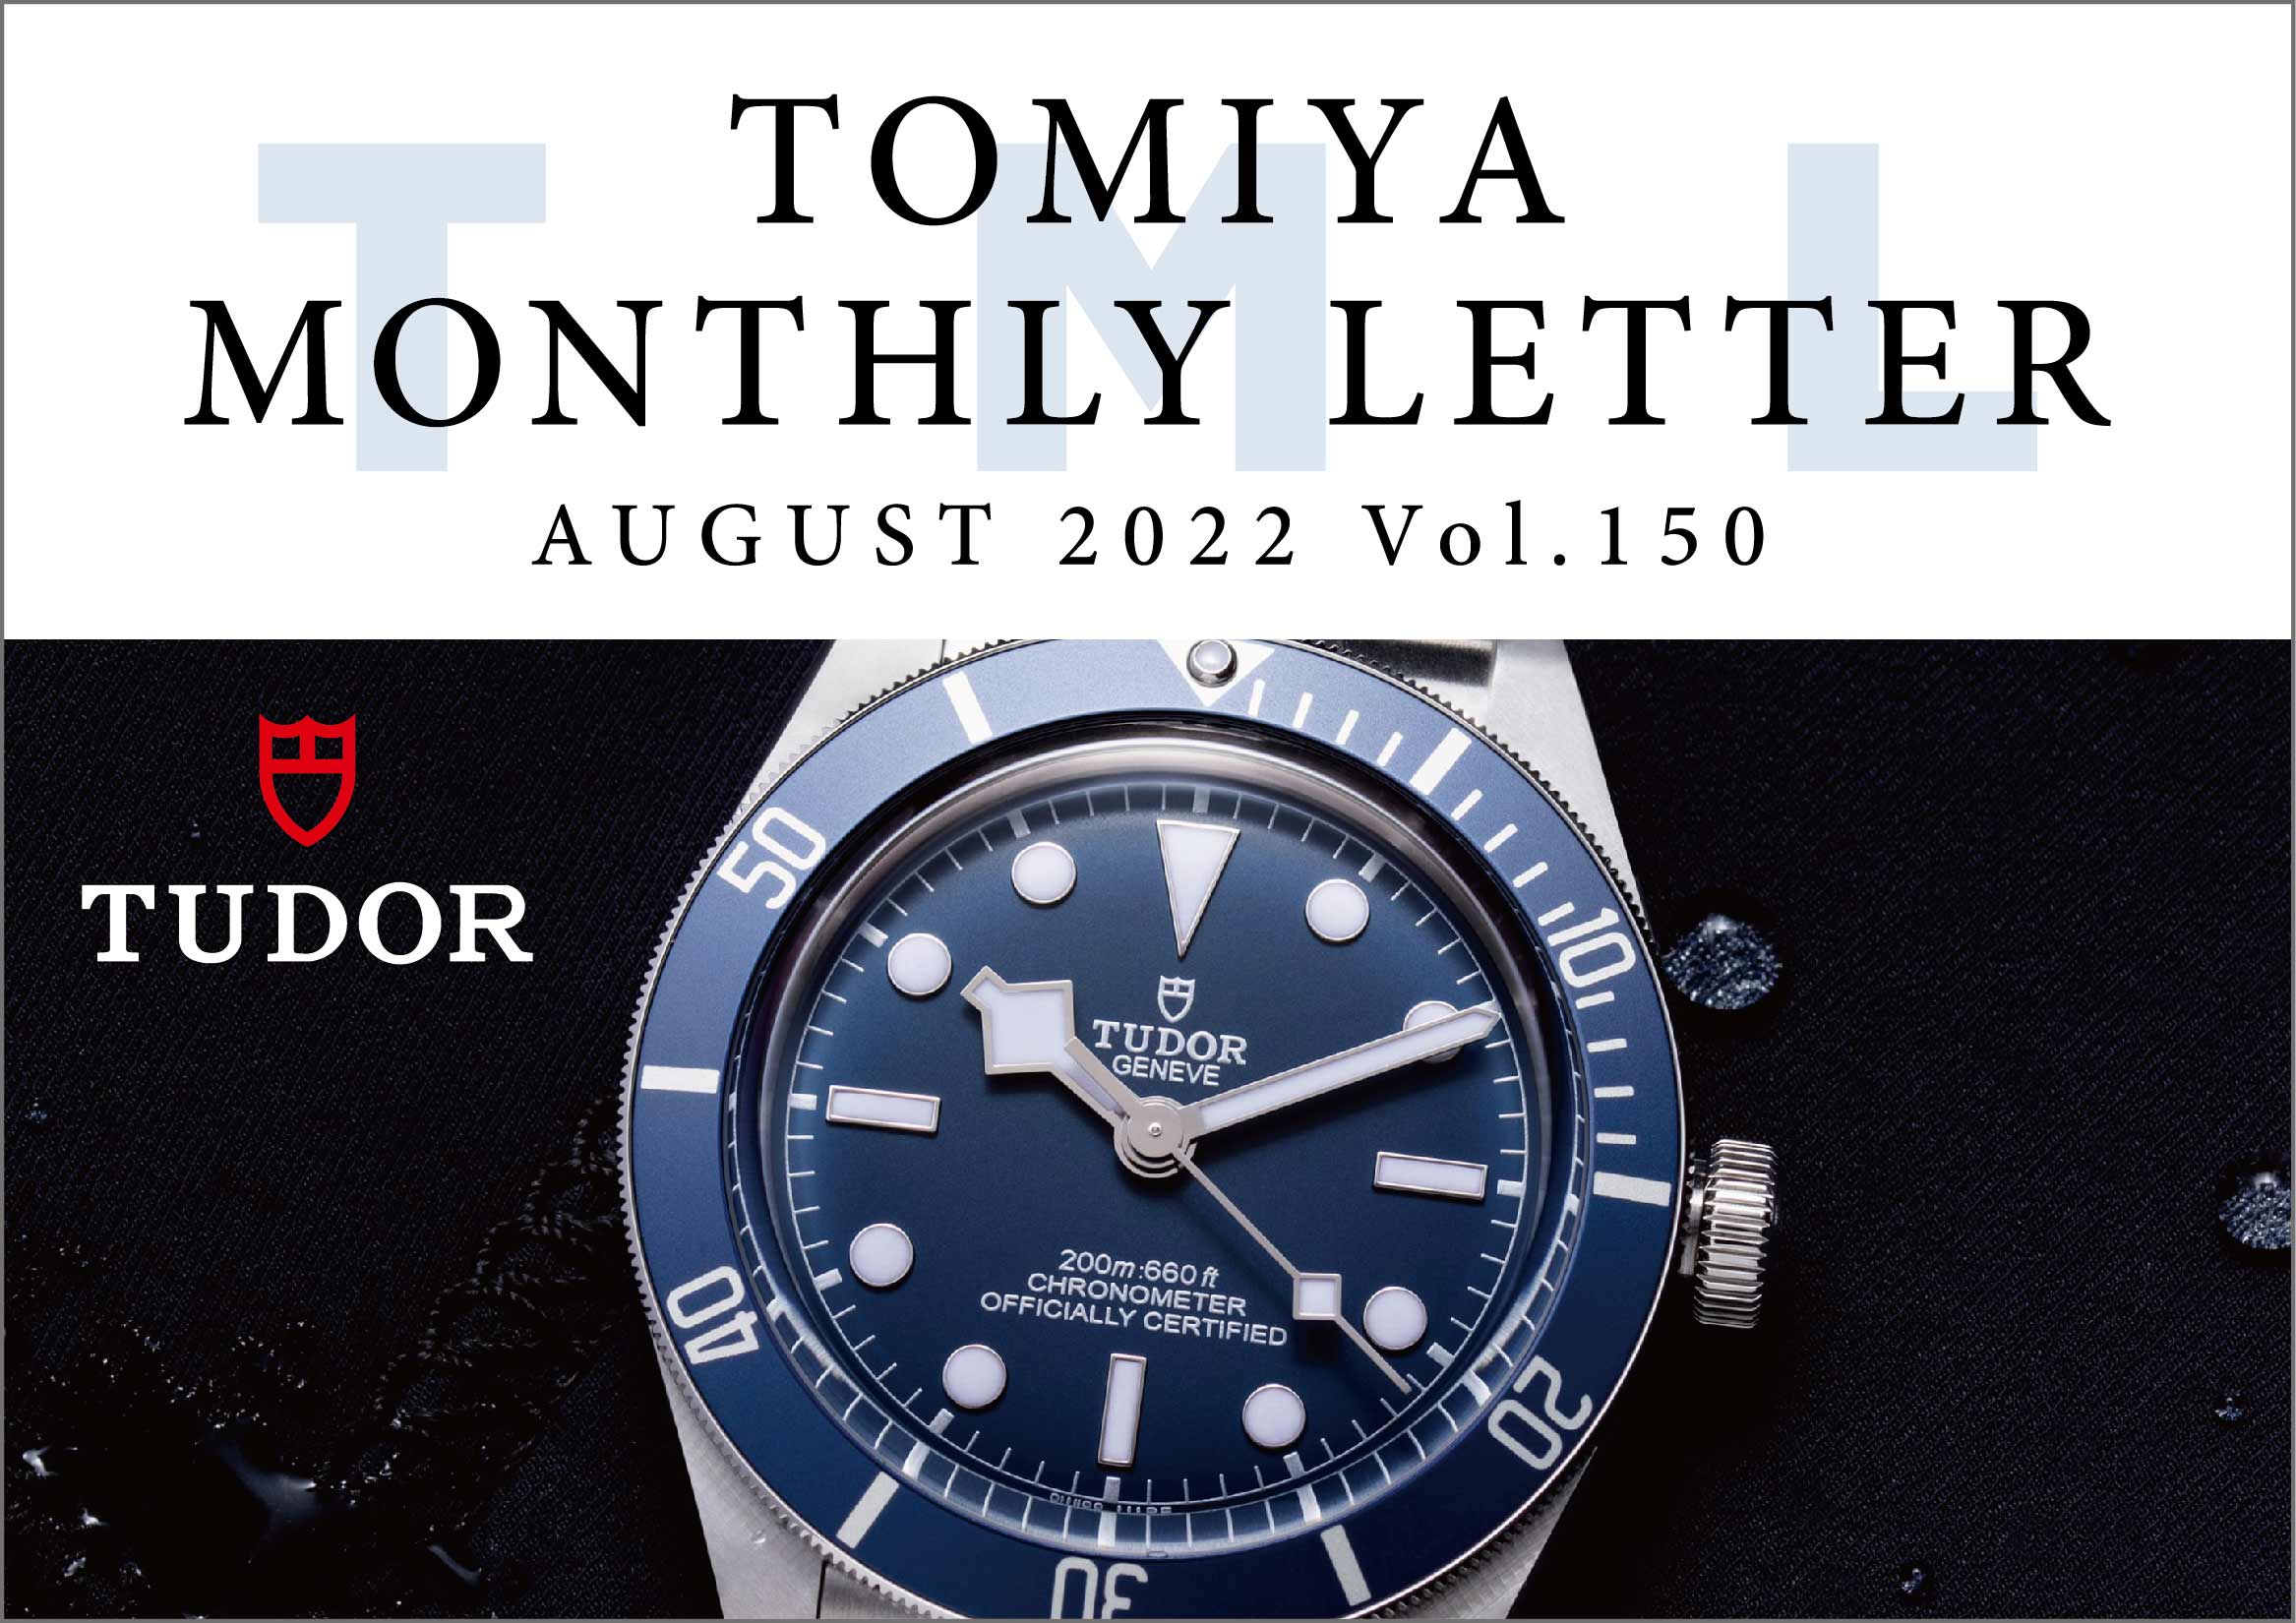 TOMIYA MONTHLY LETTER Vol.150